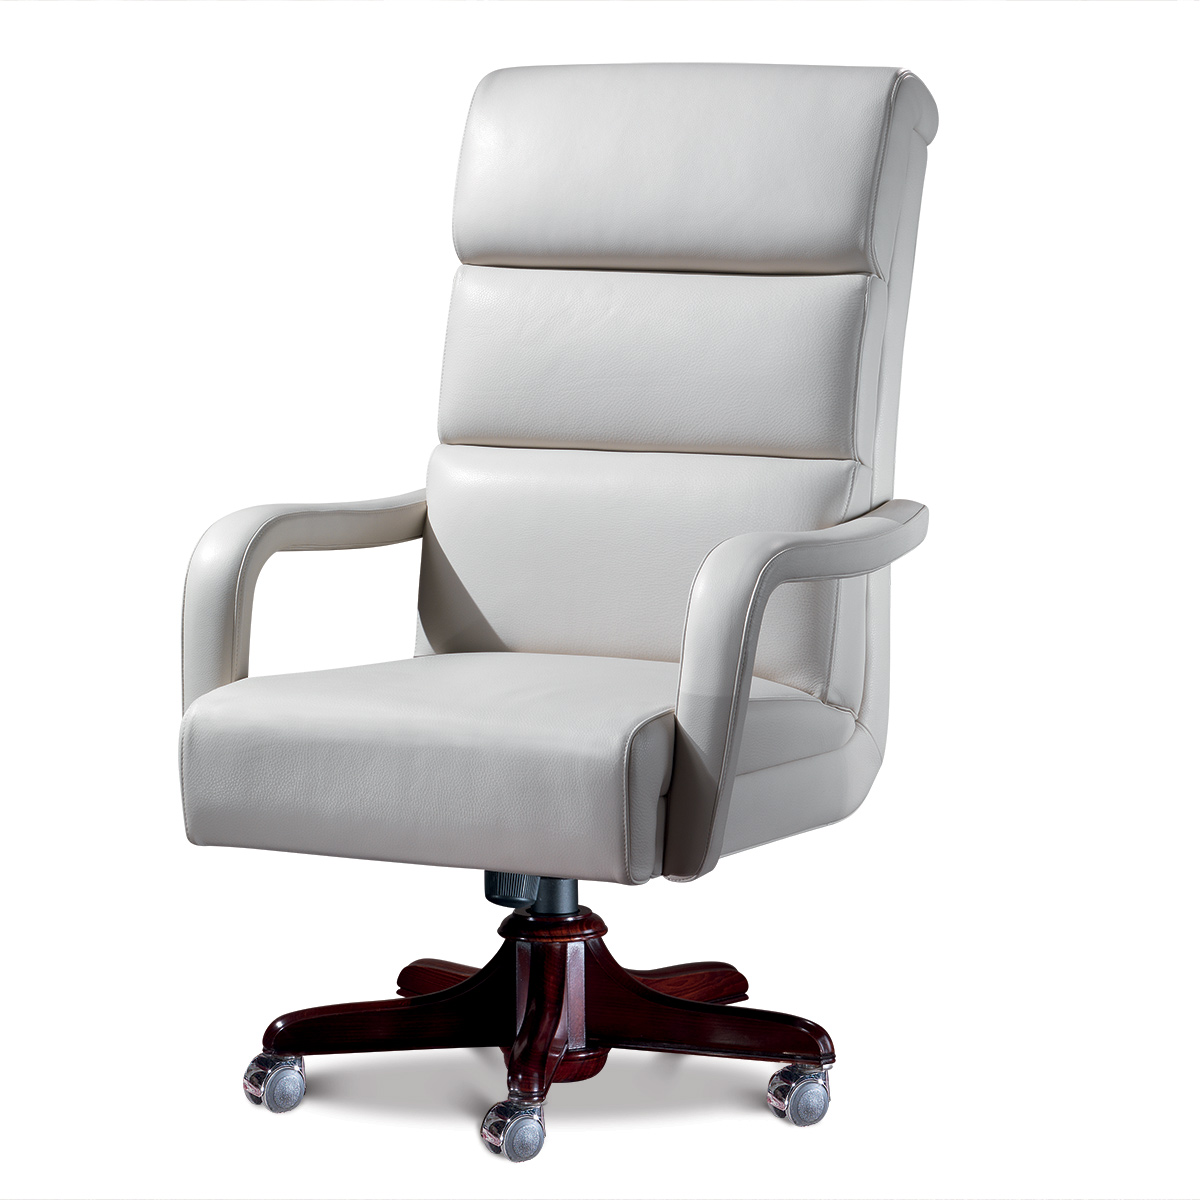 Office armchair “TRUMAN” made in italy su misura